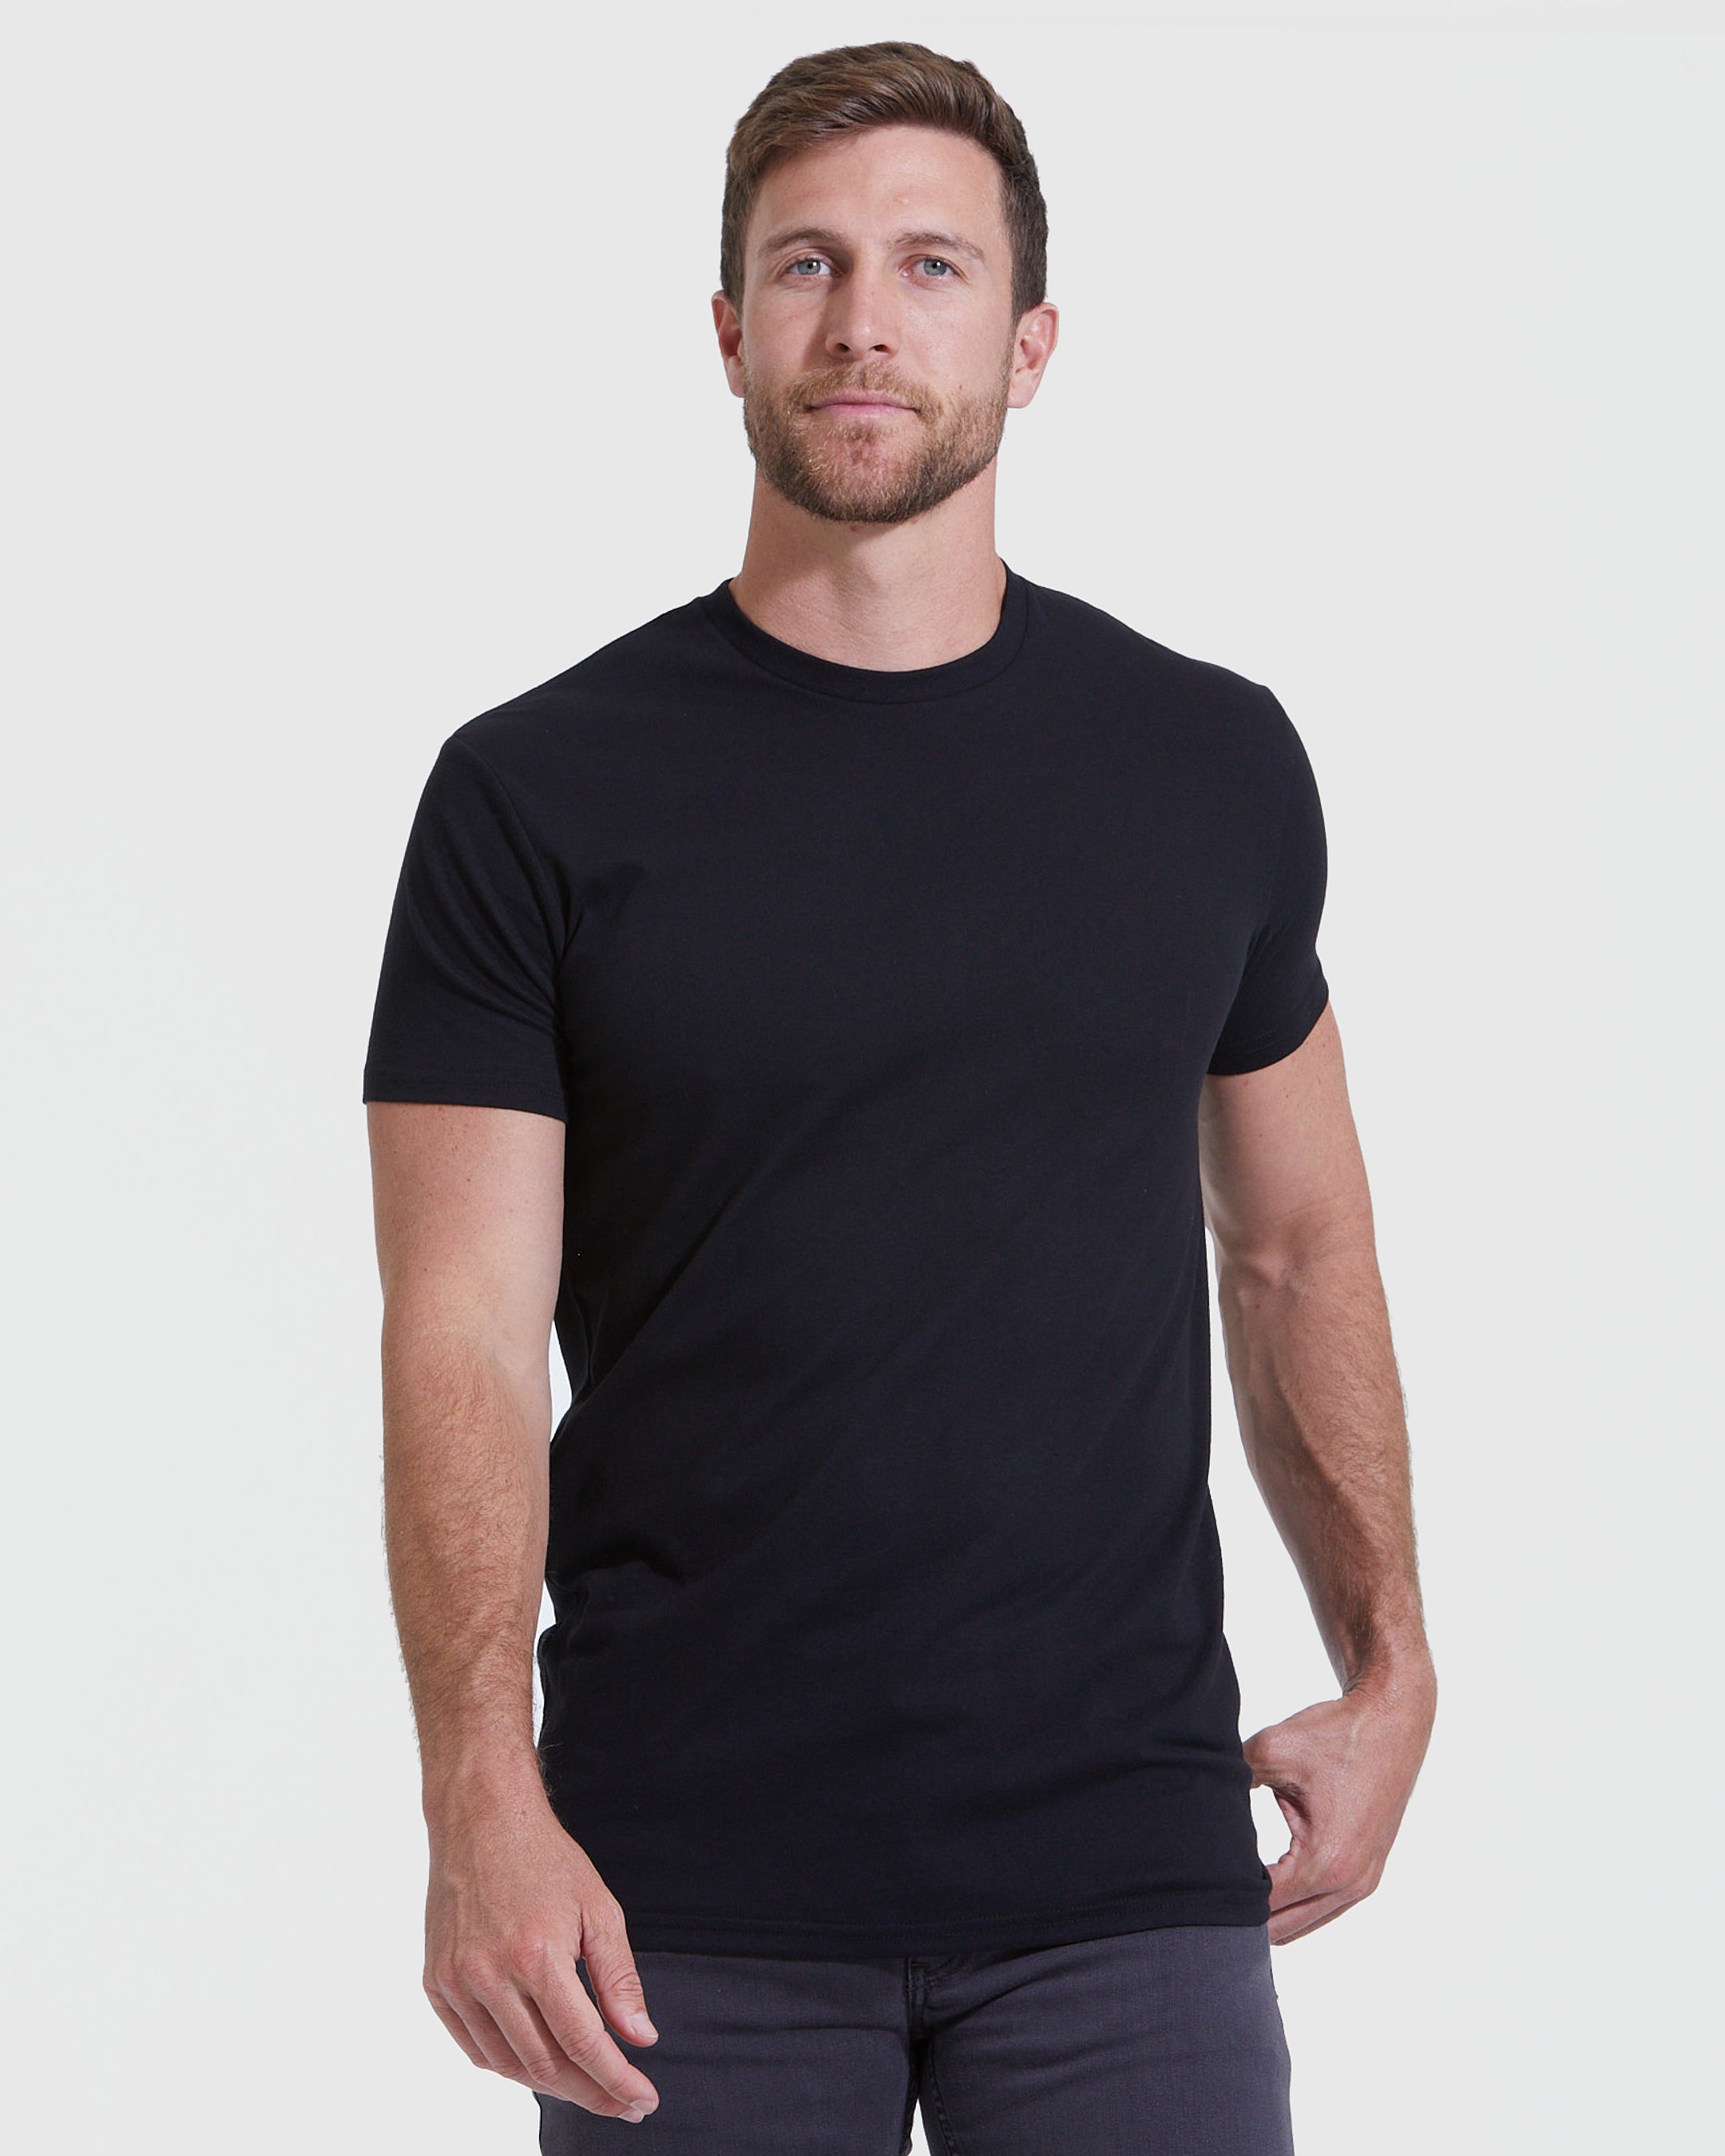 Men’s Long Black T-Shirt - True Classic